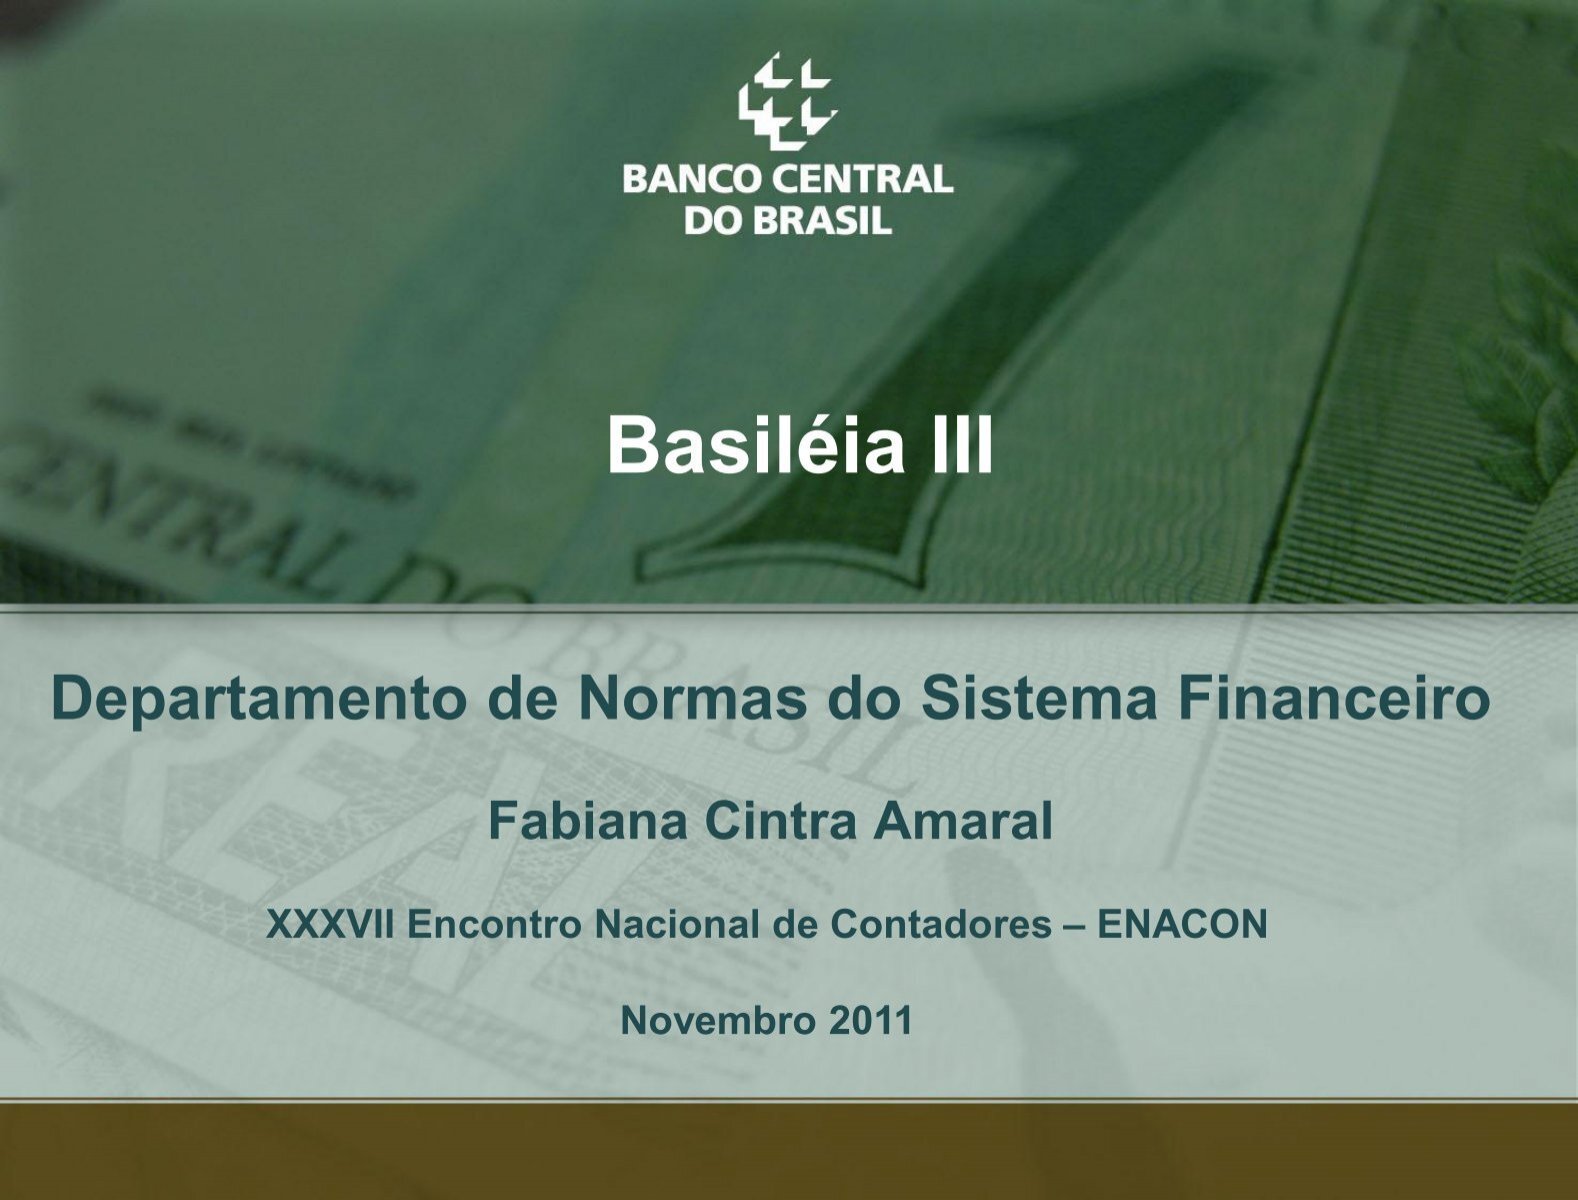 Estrutura básica de Basileia III no Brasil